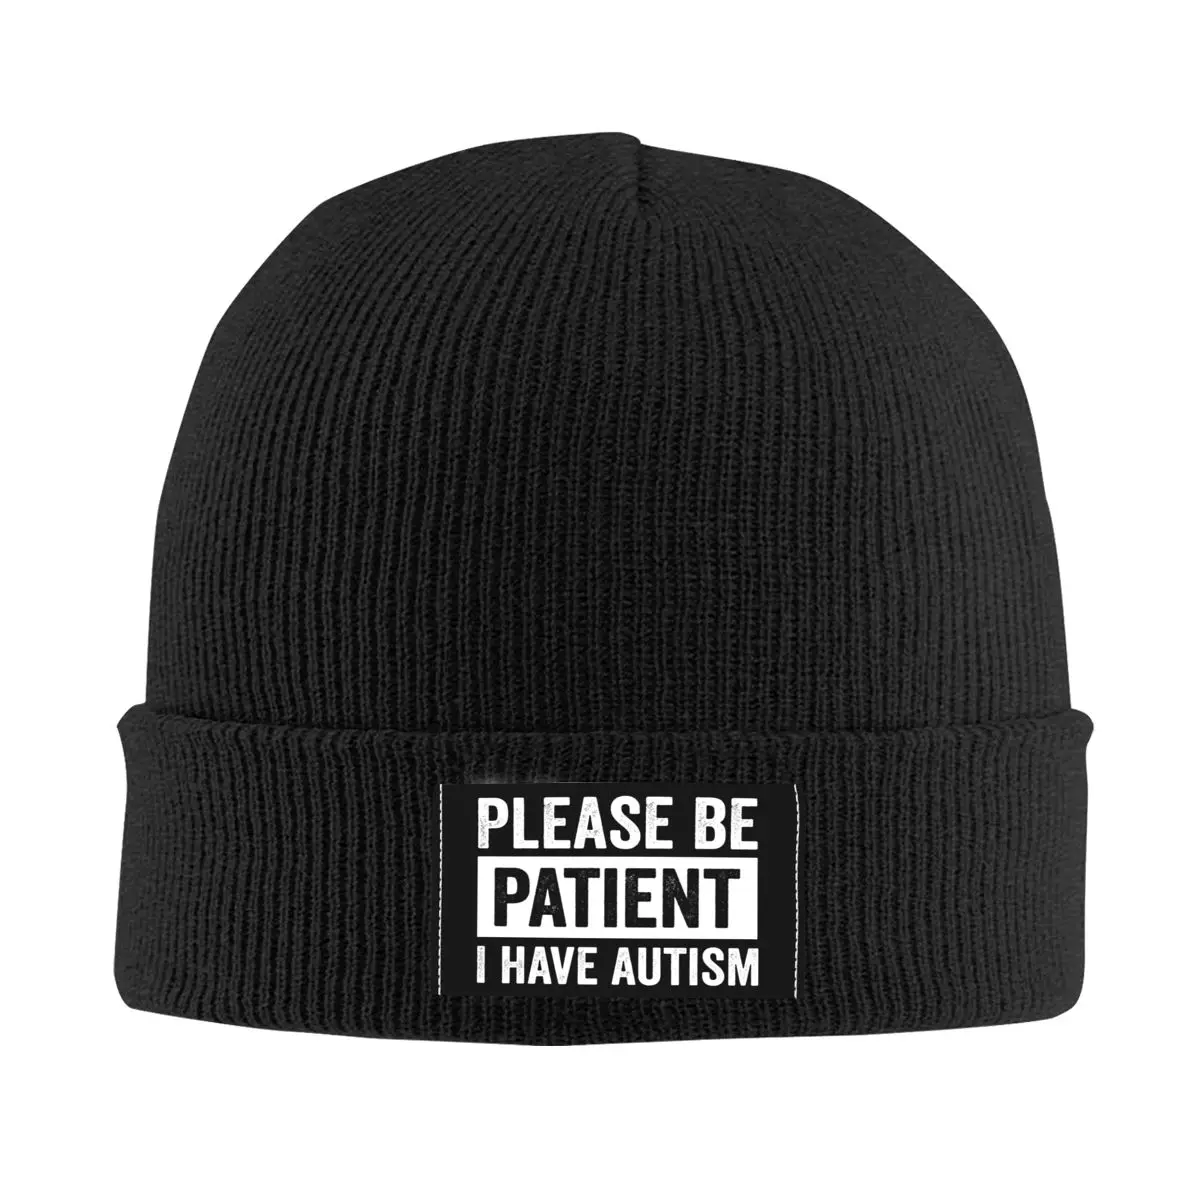 Please Be Patient I Have Autism Skullies Beanies Caps For Men Women Unisex Trend Winter Warm Knitting Hat Adult Bonnet Hats 1